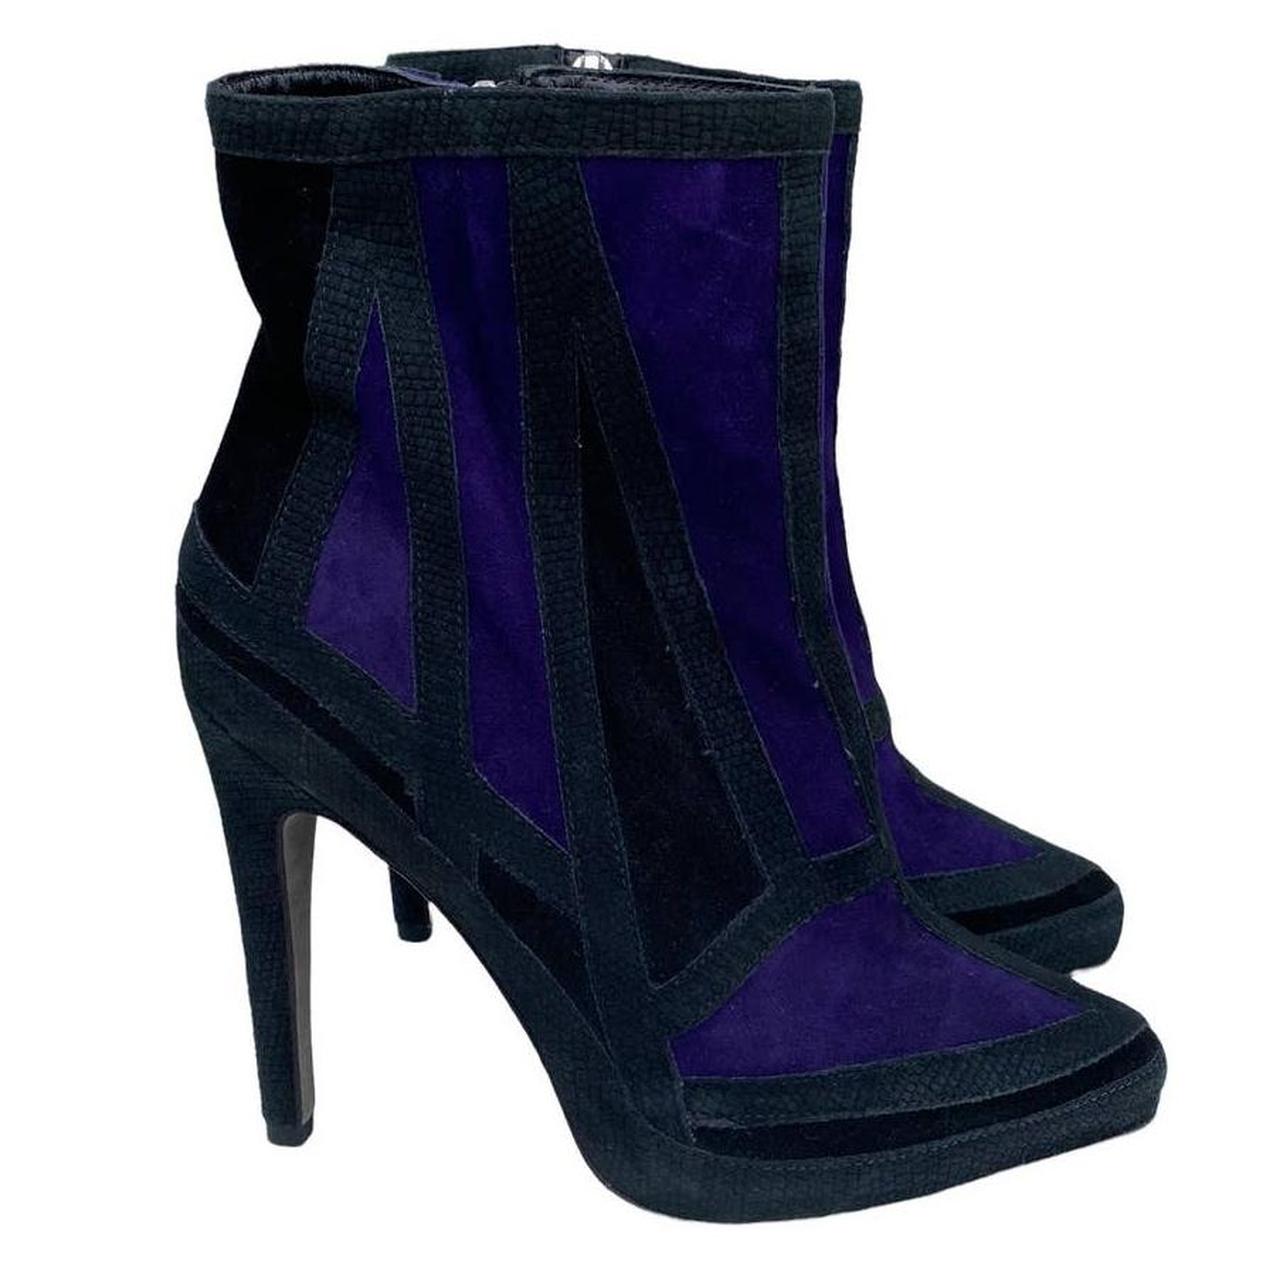 Aperlai Women's Black and Purple Boots